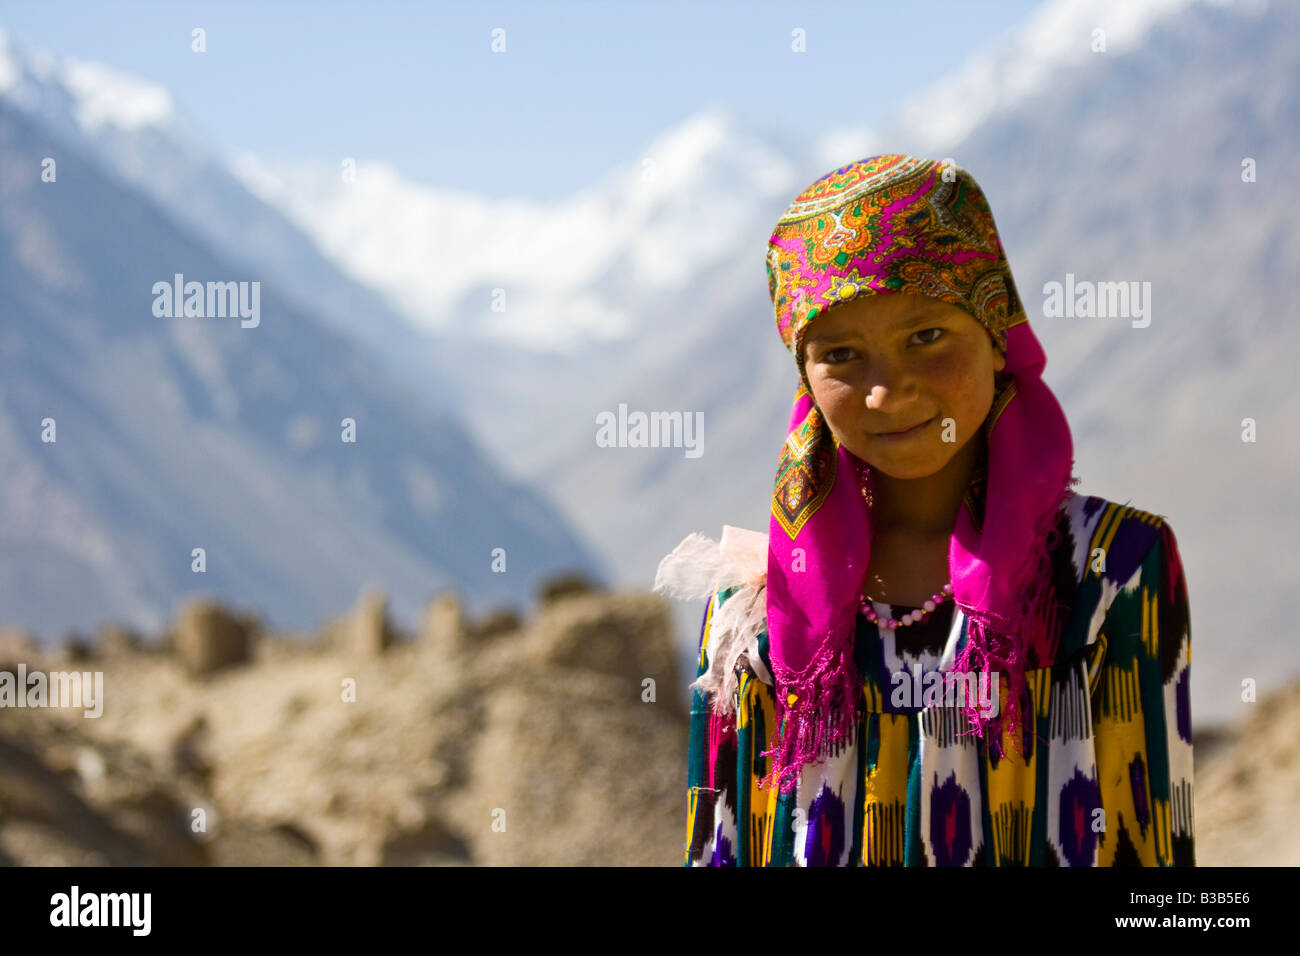 Young Tajik Girl in front of Yamchun or Zulkhomor Fort in the Wakhan Valley in Tajikistan Stock Photo